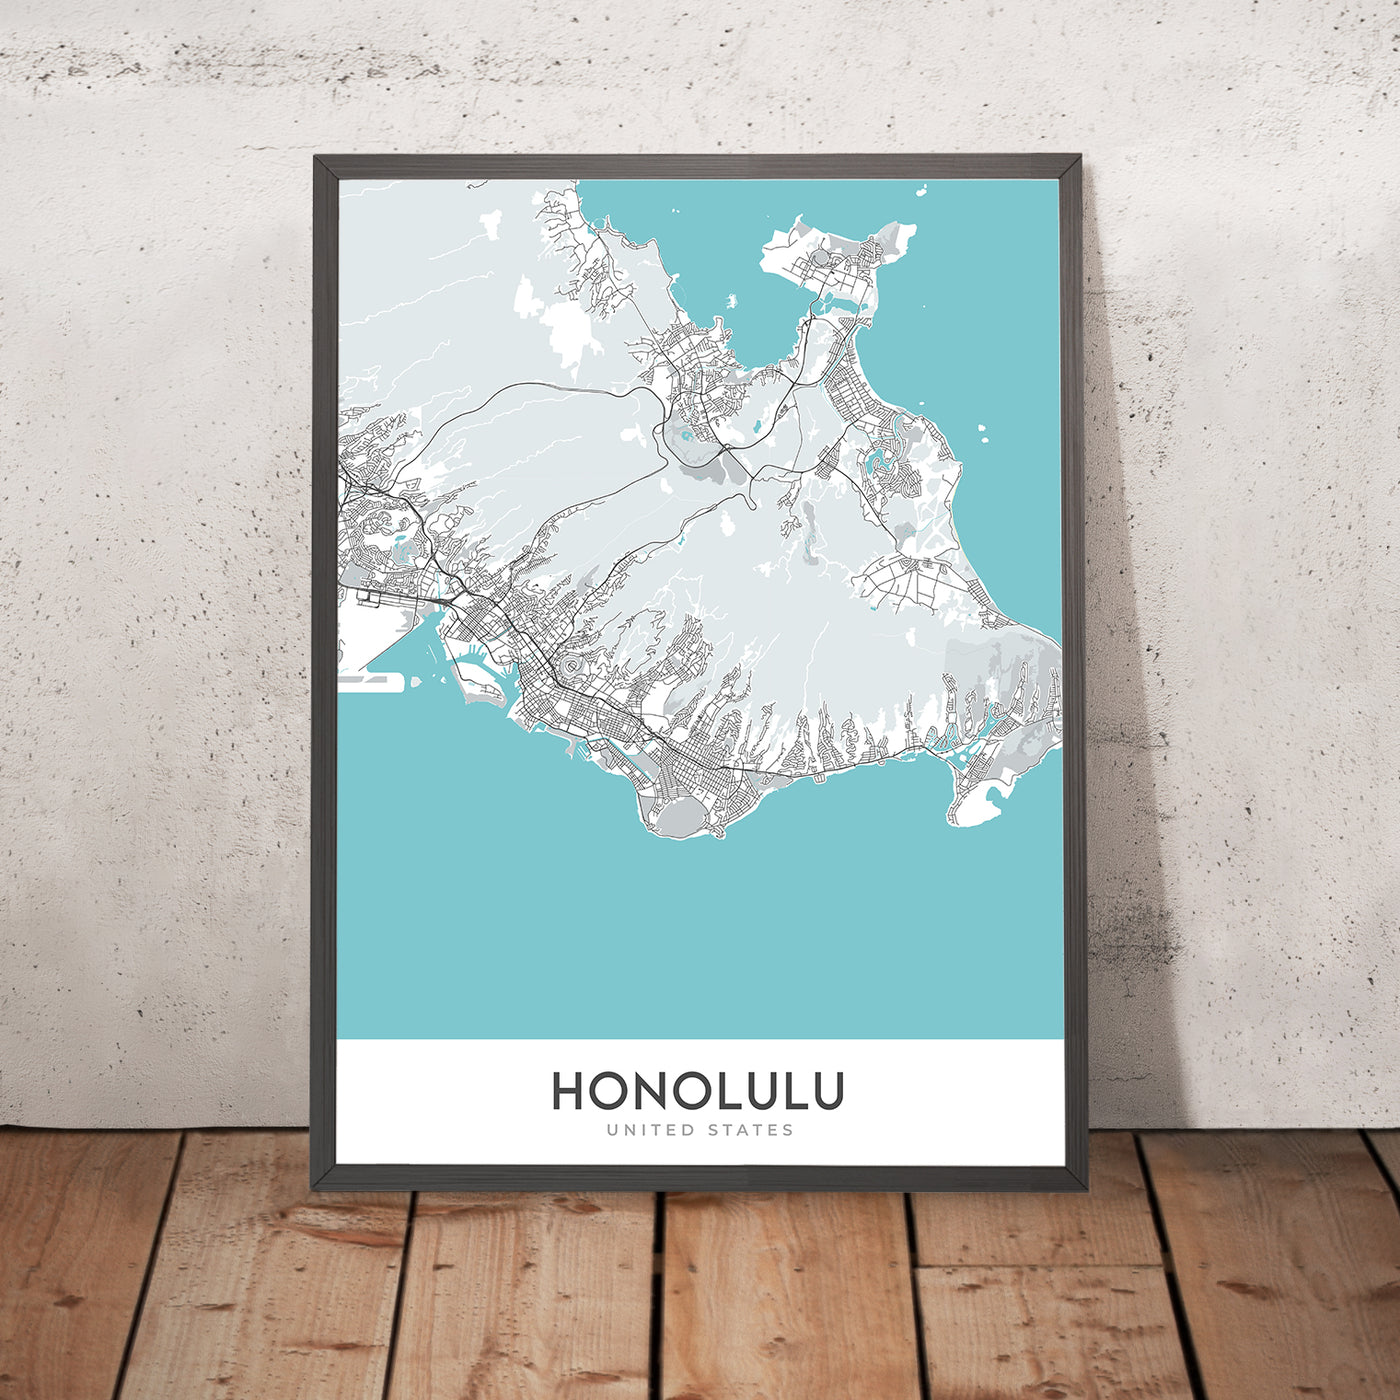 Modern City Map of Honolulu, HI: Waikiki, Diamond Head, Downtown, Ala Moana, University of Hawaii